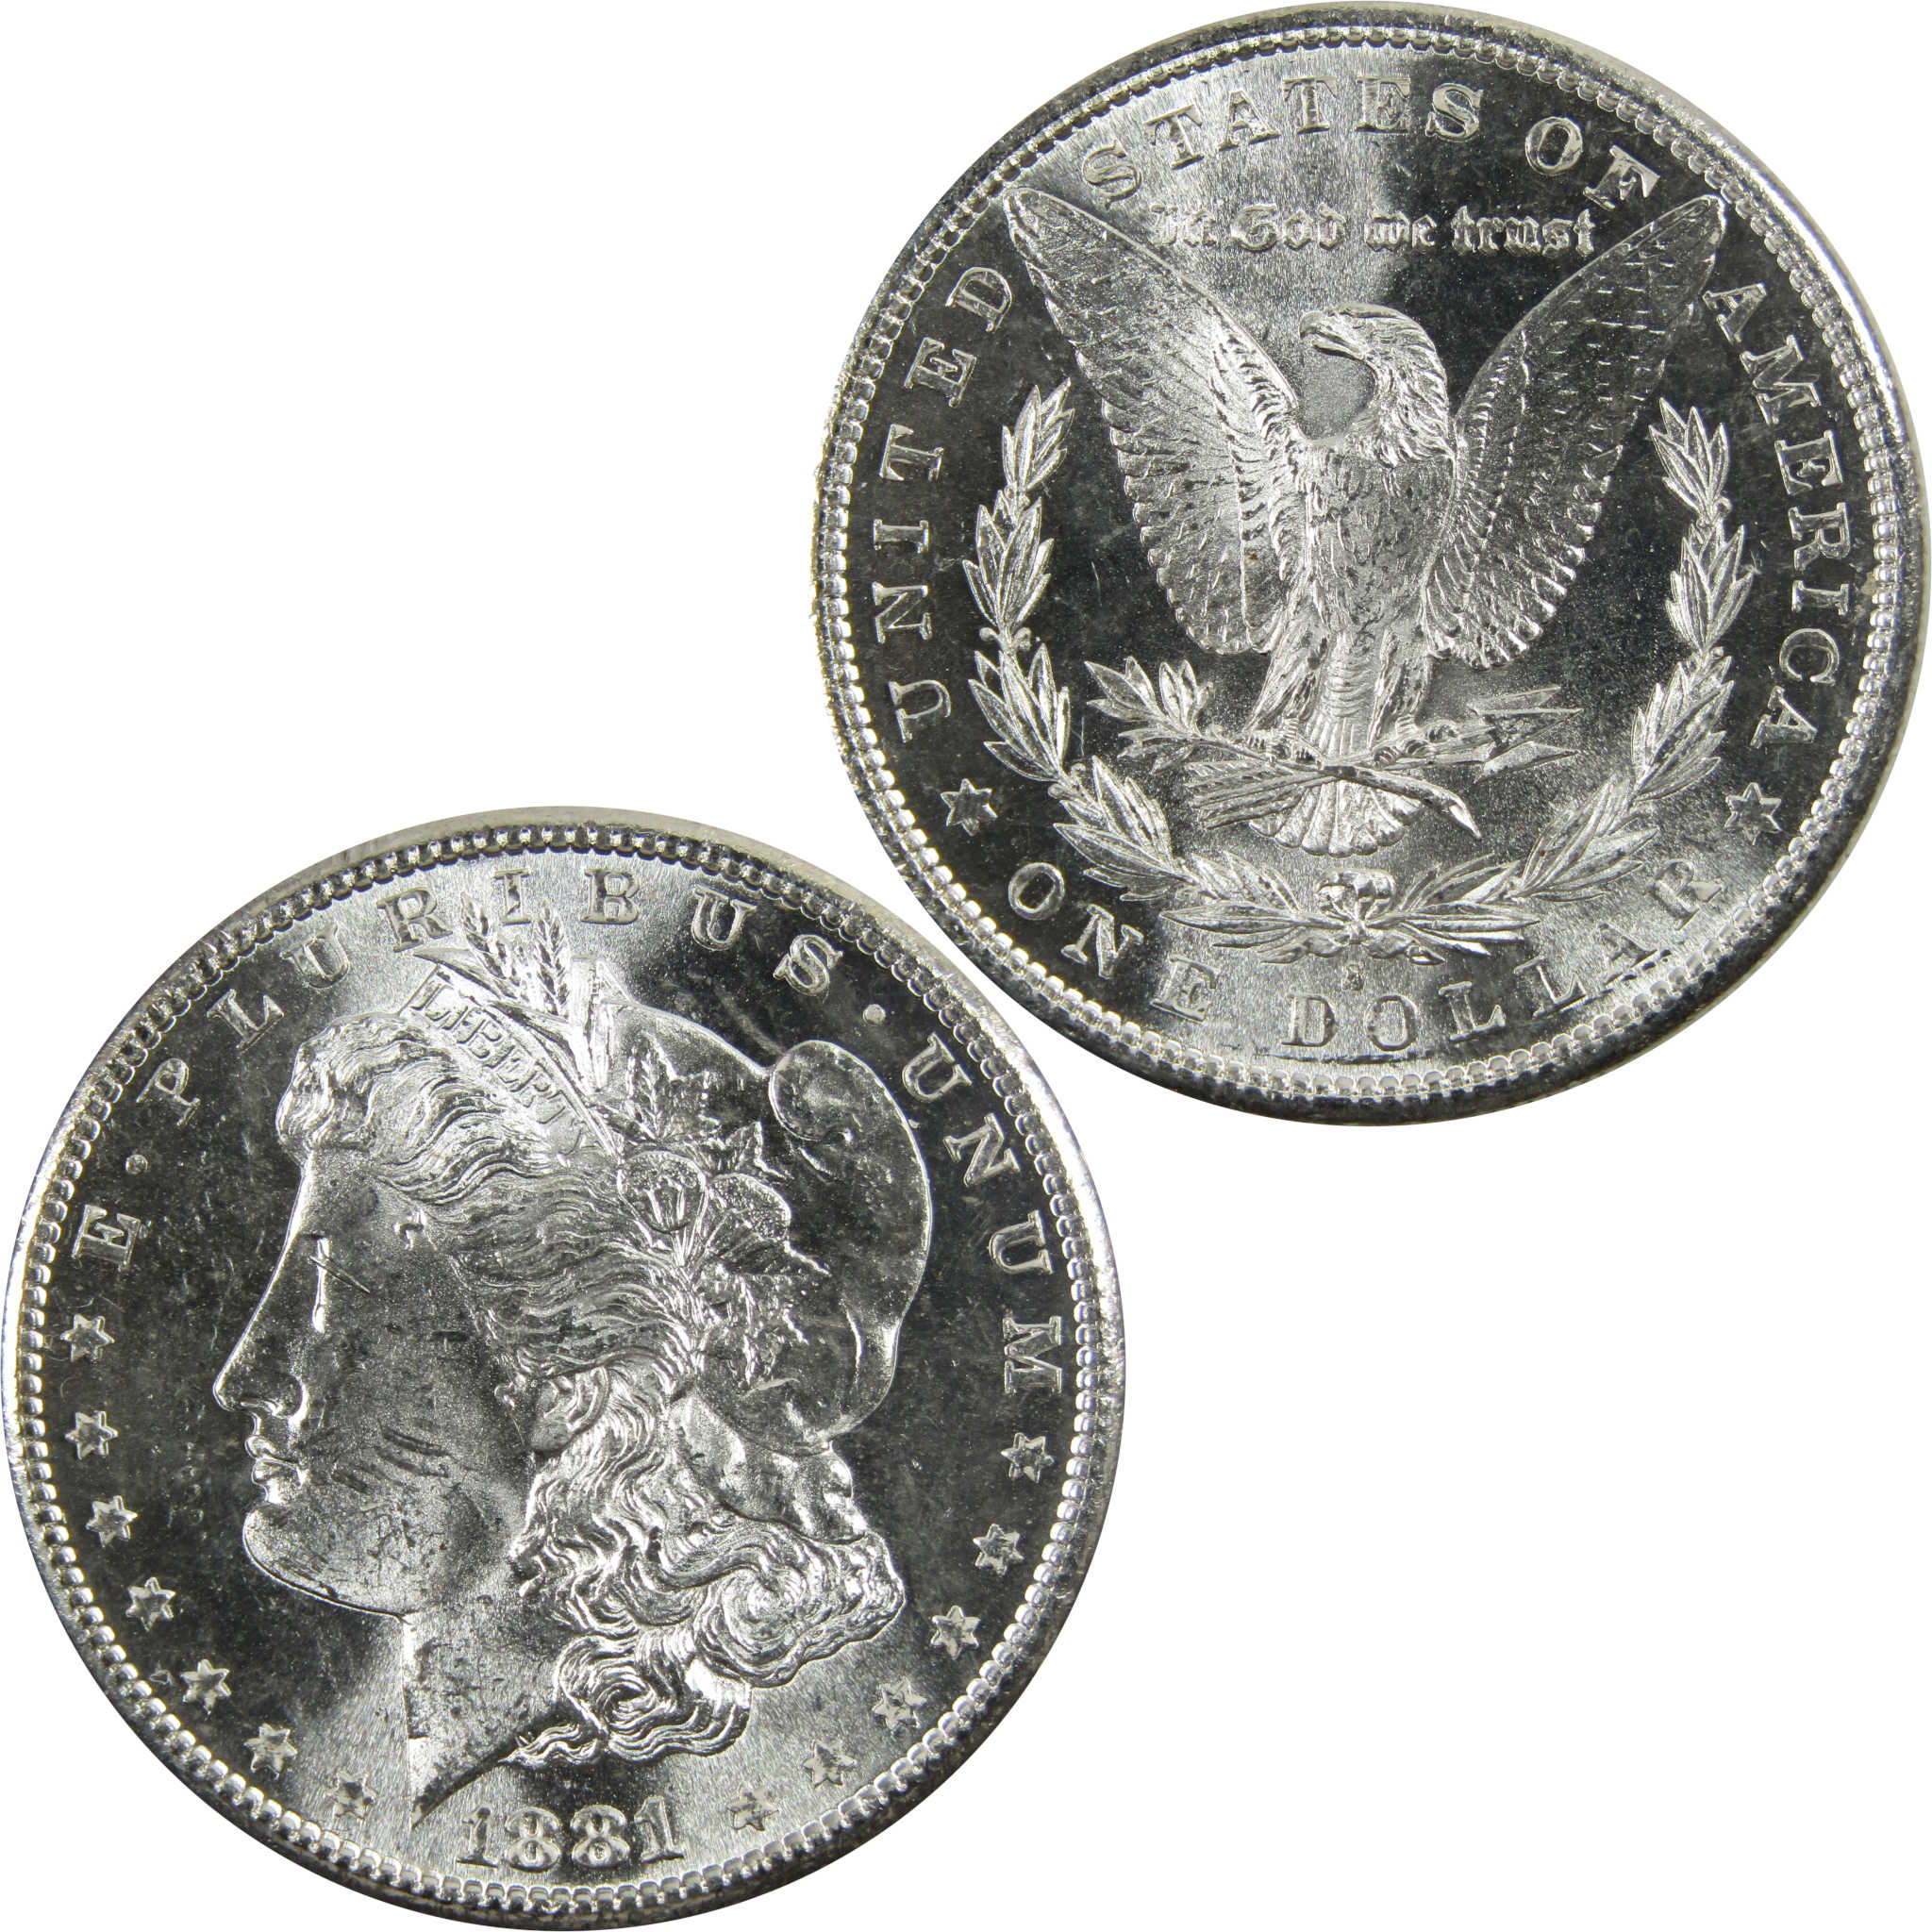 1881 S Morgan Dollar BU Uncirculated 90% Silver $1 Coin SKU:I5297 - Morgan coin - Morgan silver dollar - Morgan silver dollar for sale - Profile Coins &amp; Collectibles